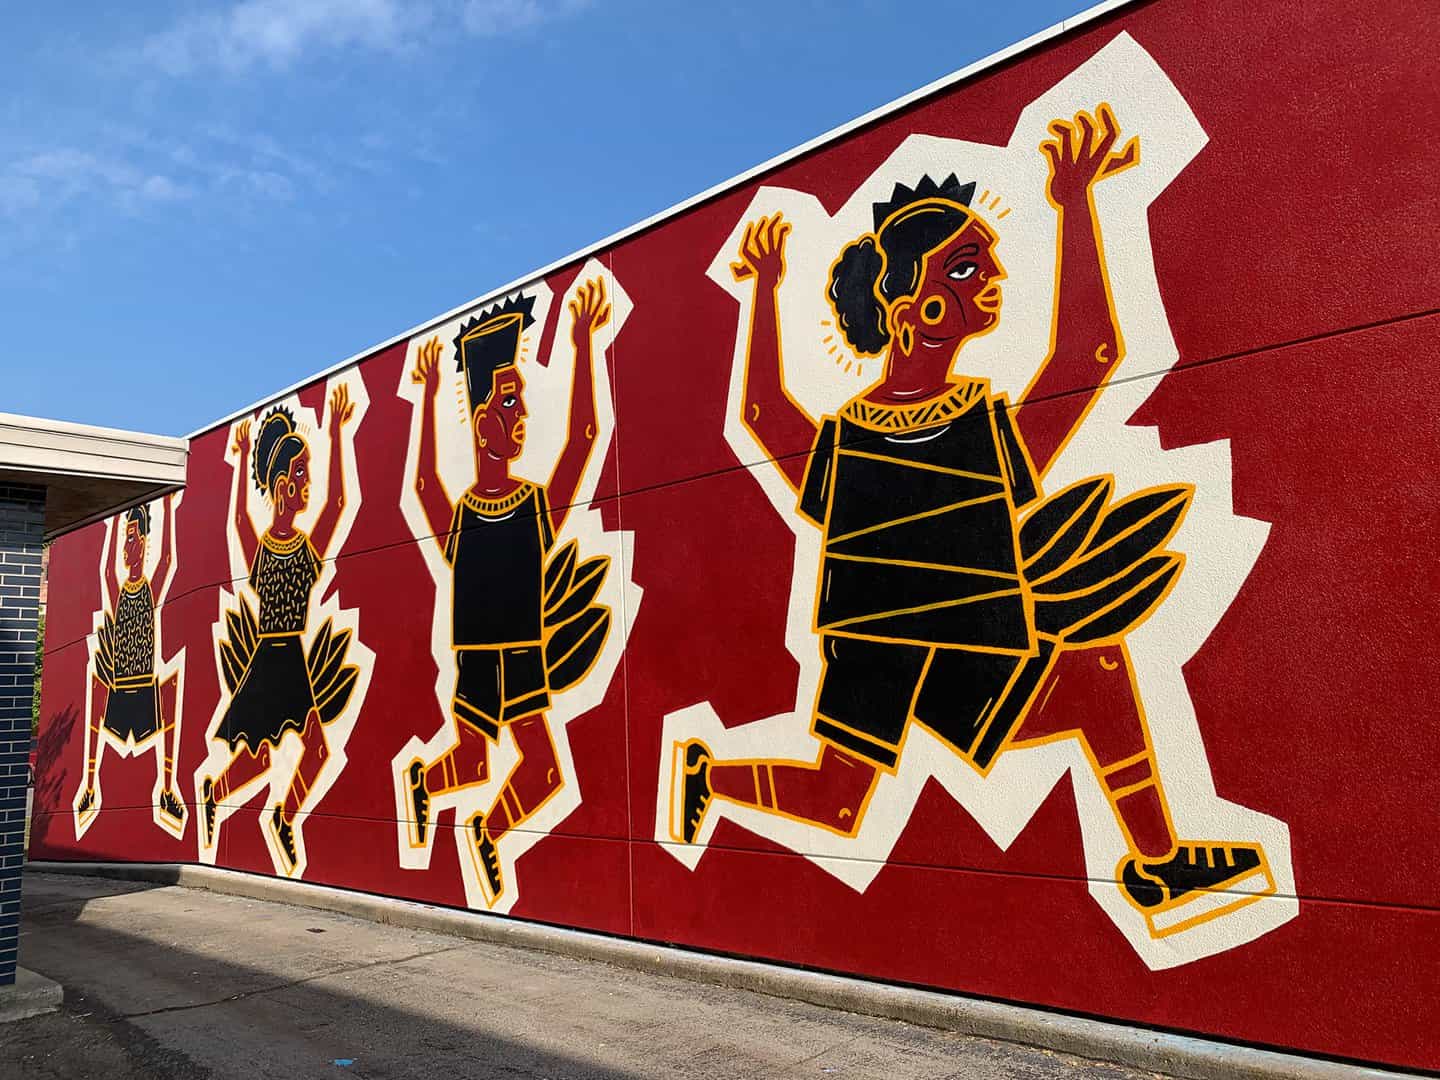 Karabo amapola Moletsane: Paredes brillantes Mural Festival, Michigan (Copyright © Karabo amapola Moletsane, 2019)